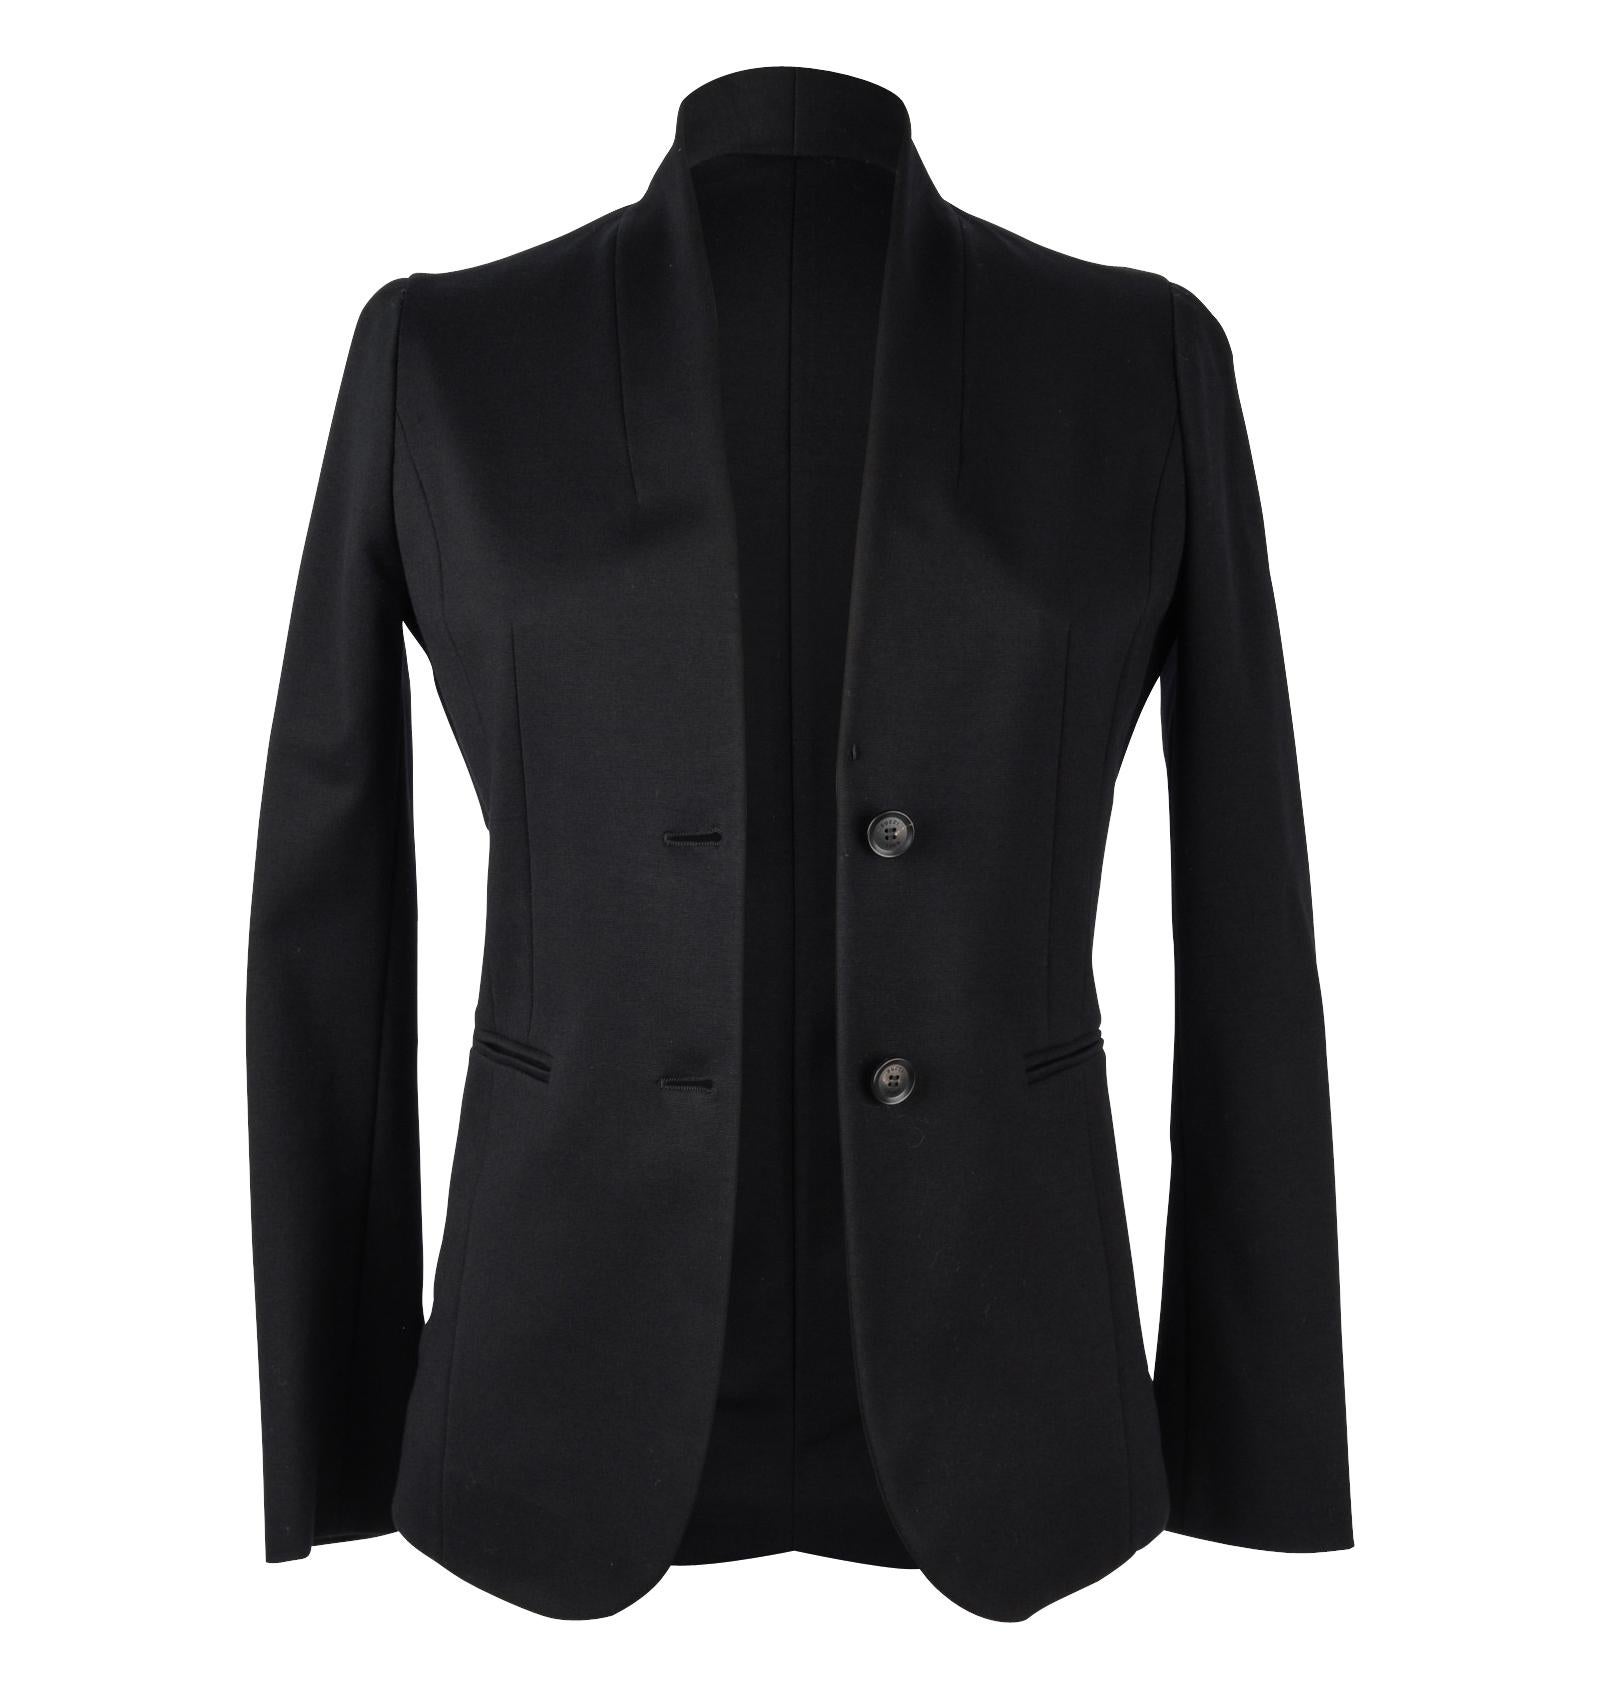 Gucci Jacket Modern Sleek Black Single Breast 38 / 6  1